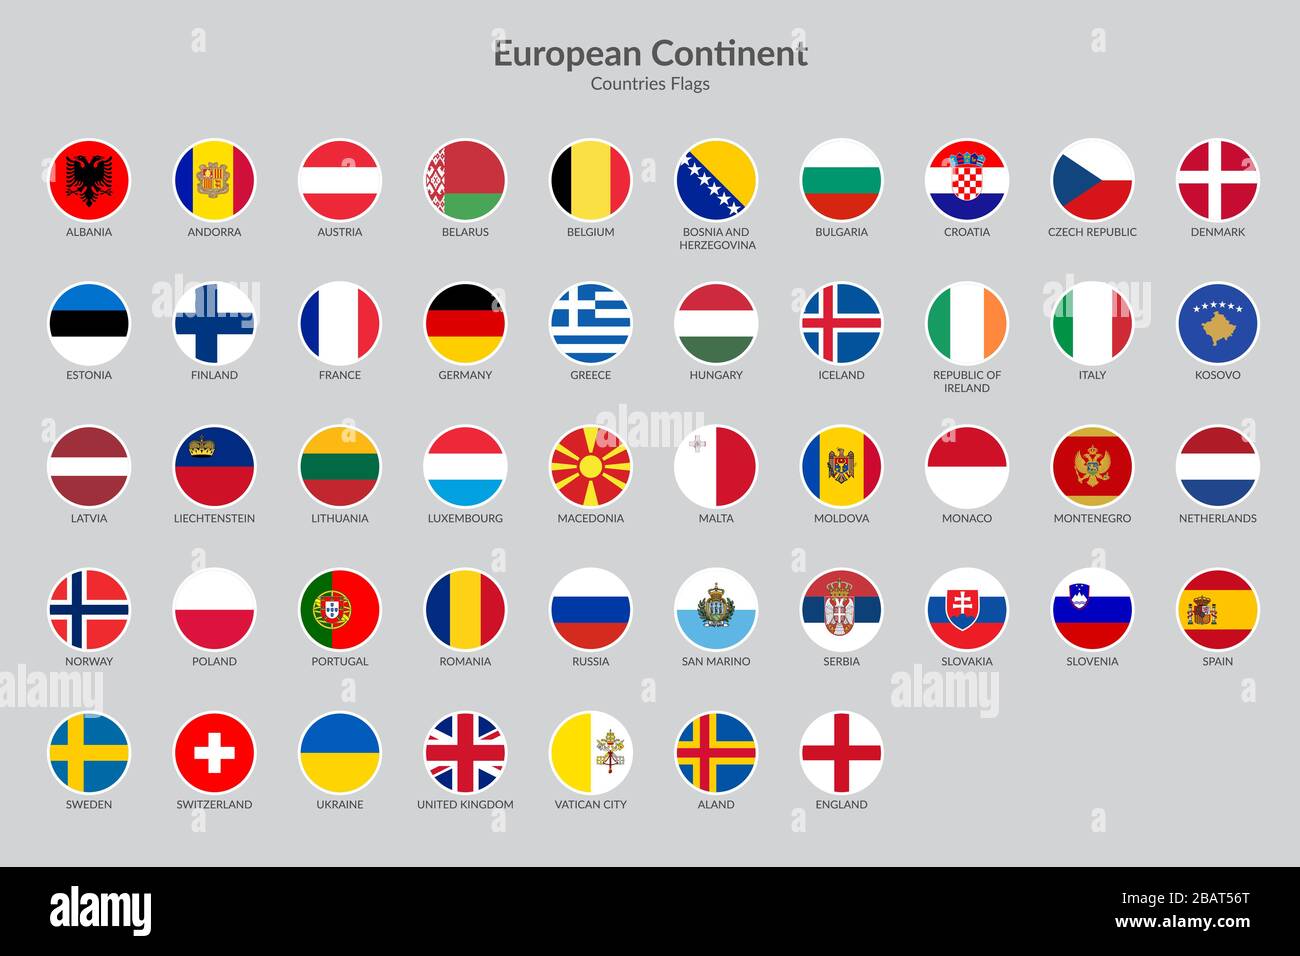 European countries flag icons collection Stock Vector